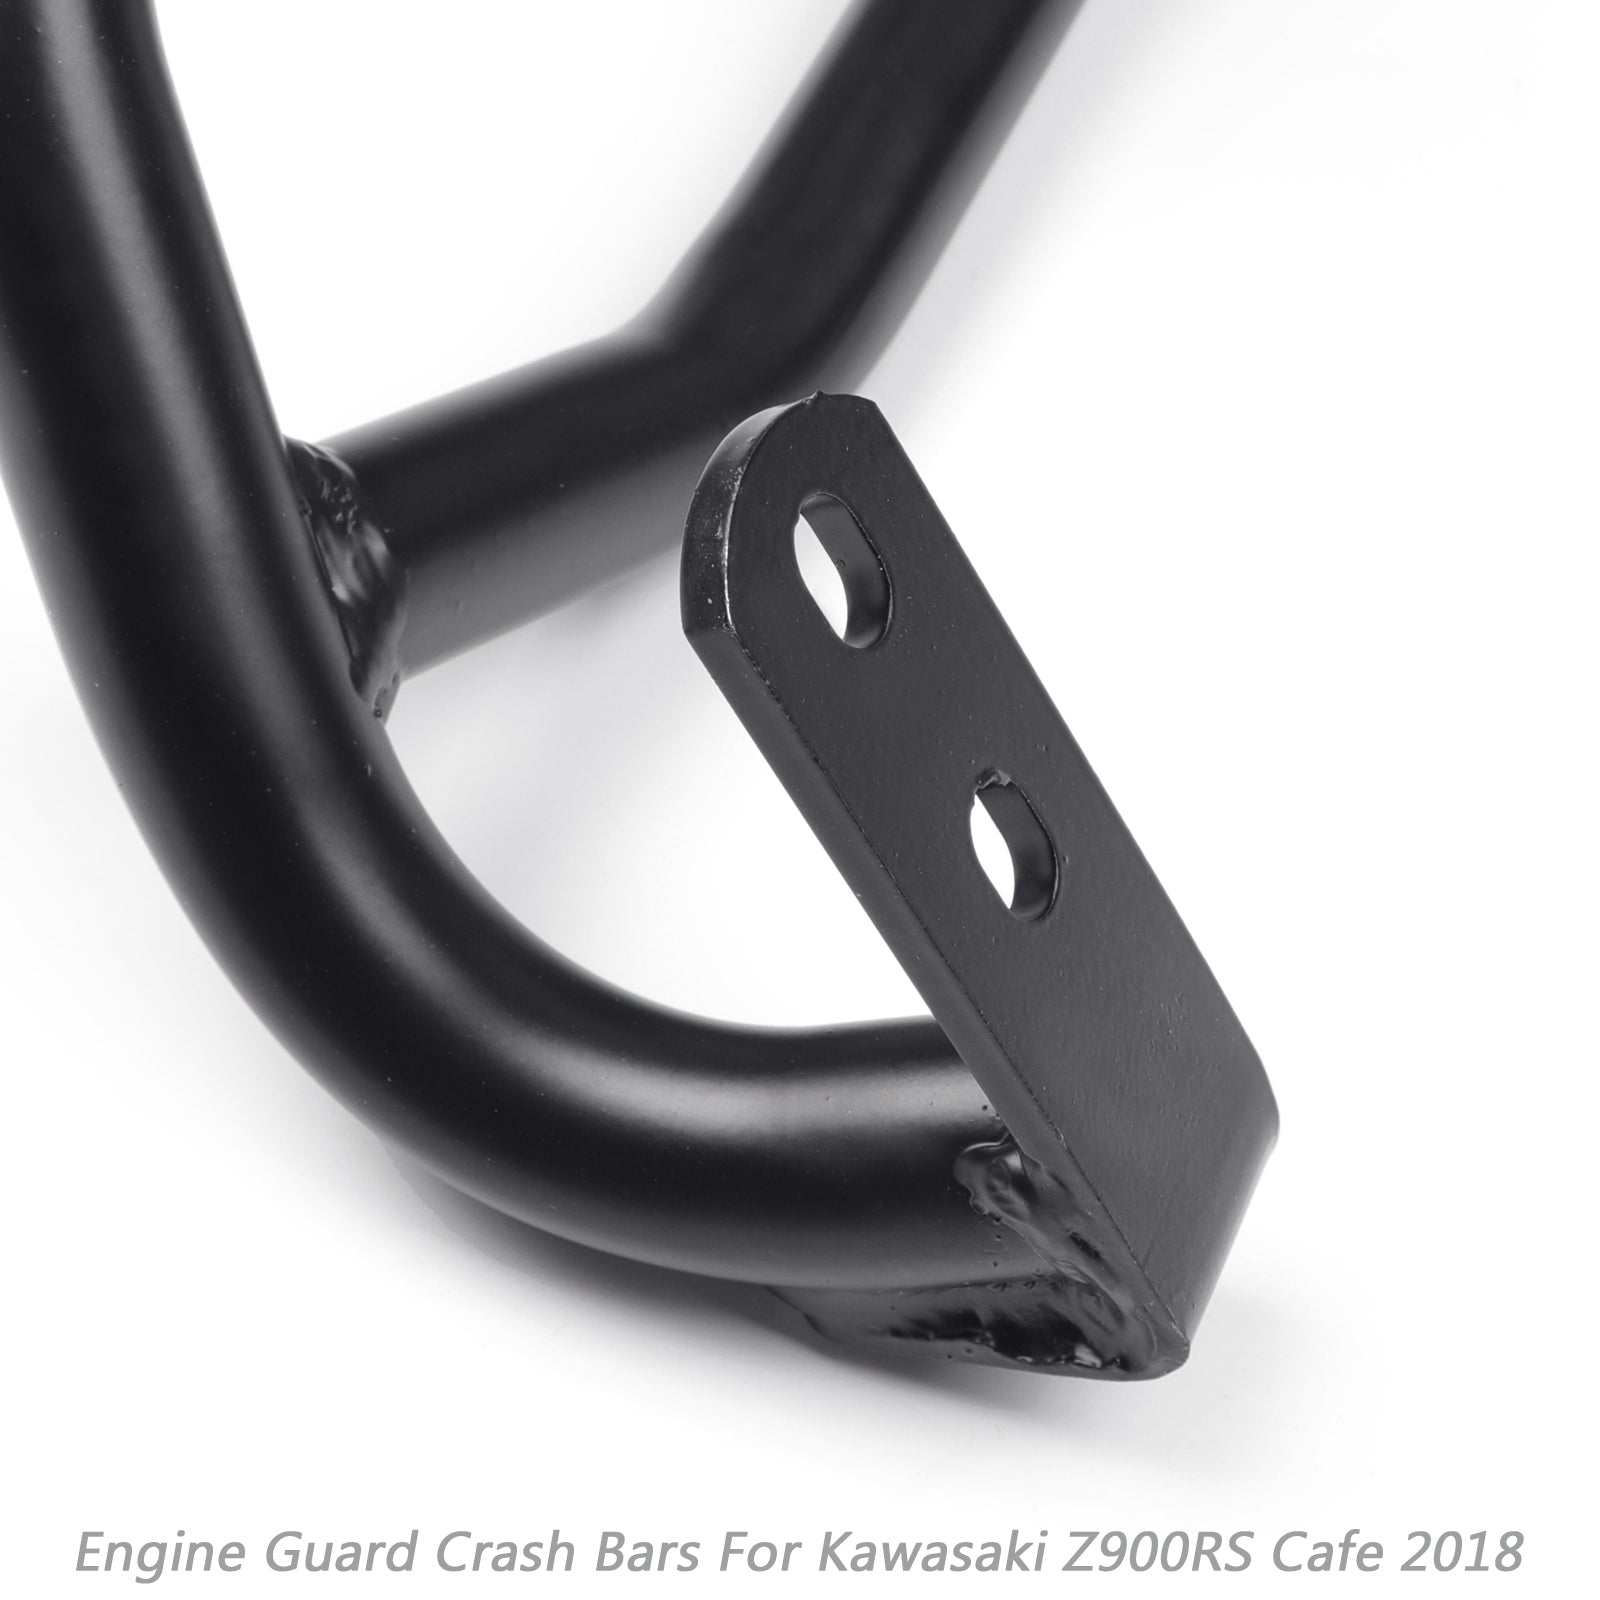 Barre paramotore Highway Motorcycle Engine Guard per Kawasaki Z900RS Cafe 2018 Generico